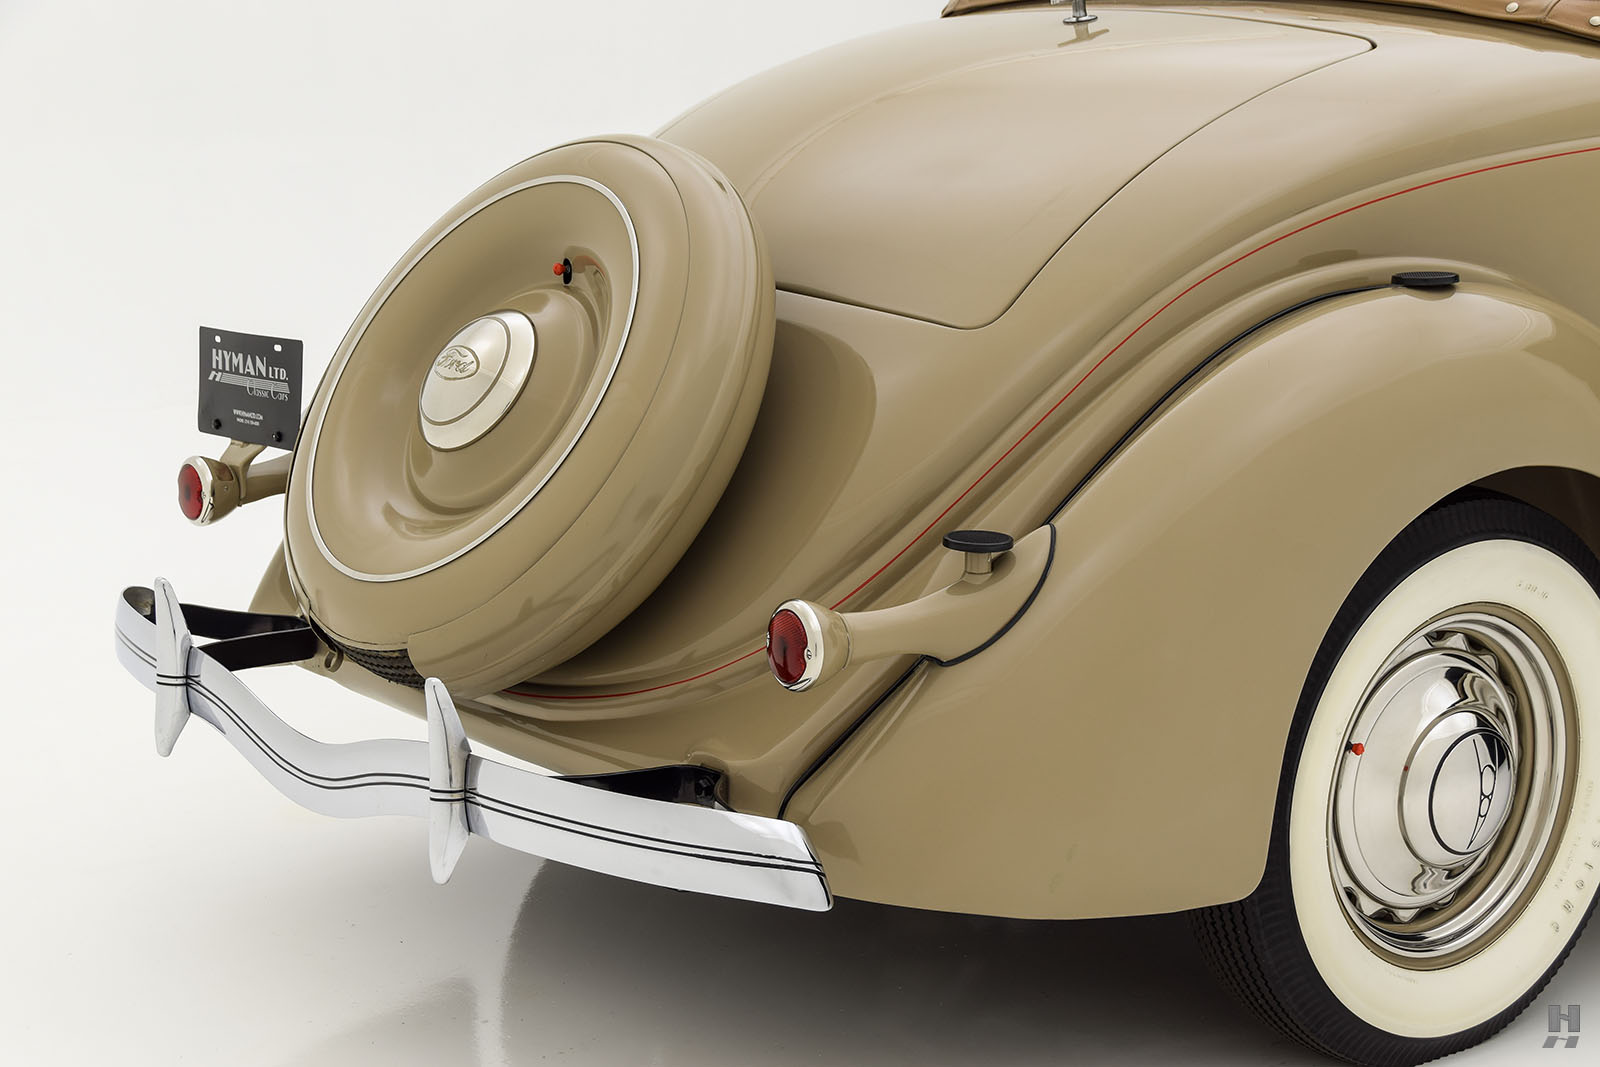 1936 ford model 68 standard